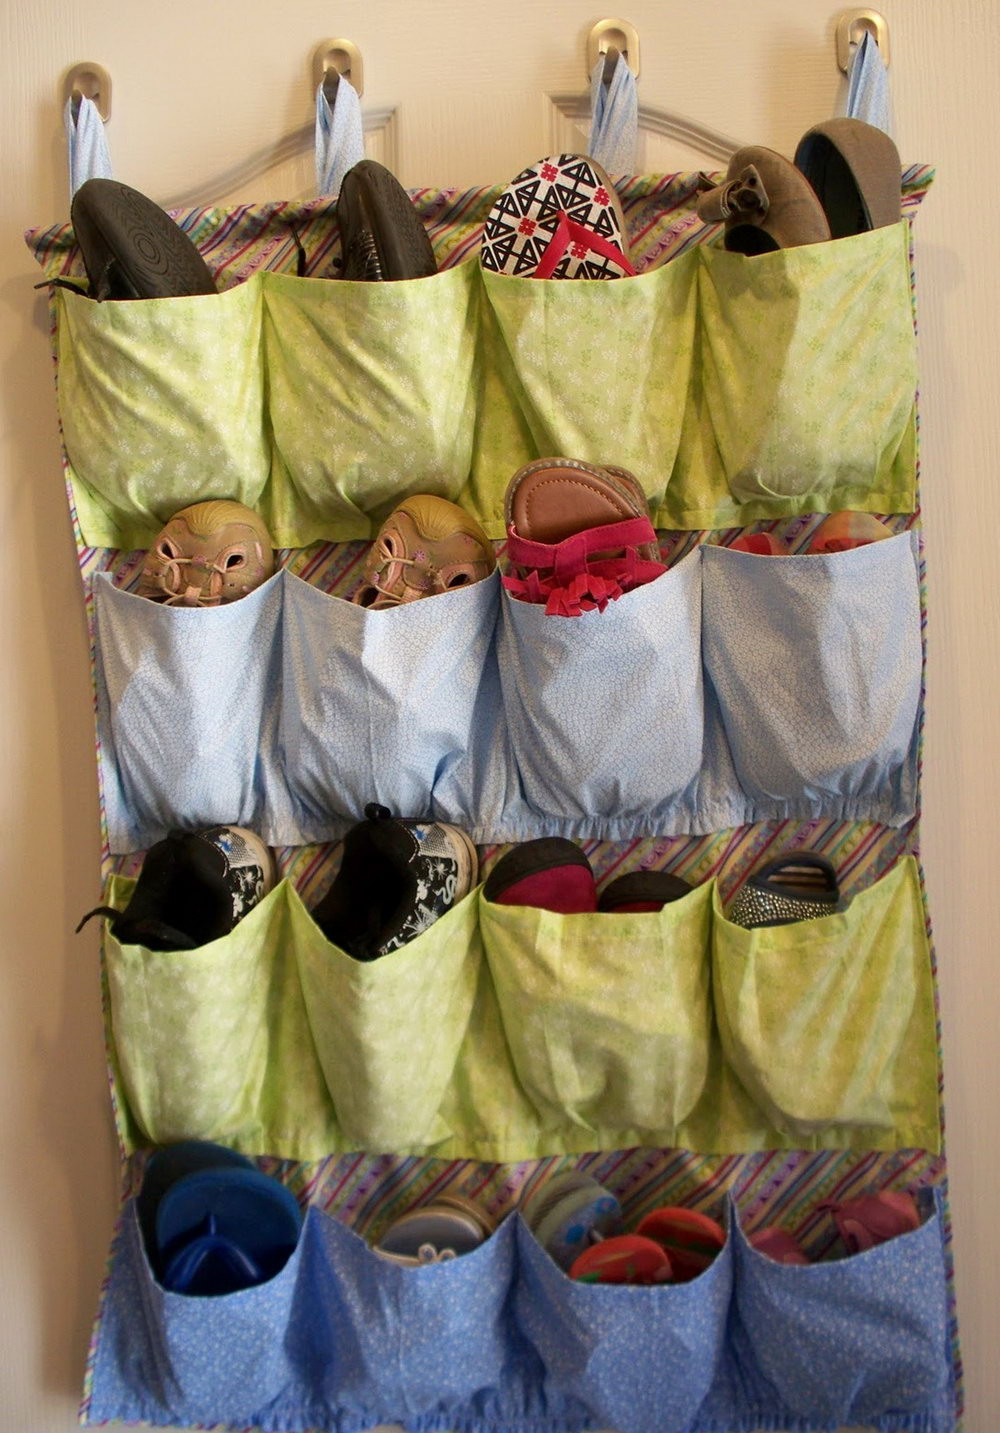 Best ideas about Hanging Shoe Organizer DIY
. Save or Pin how to make hanging shoe organizer – Loris Decoration Now.